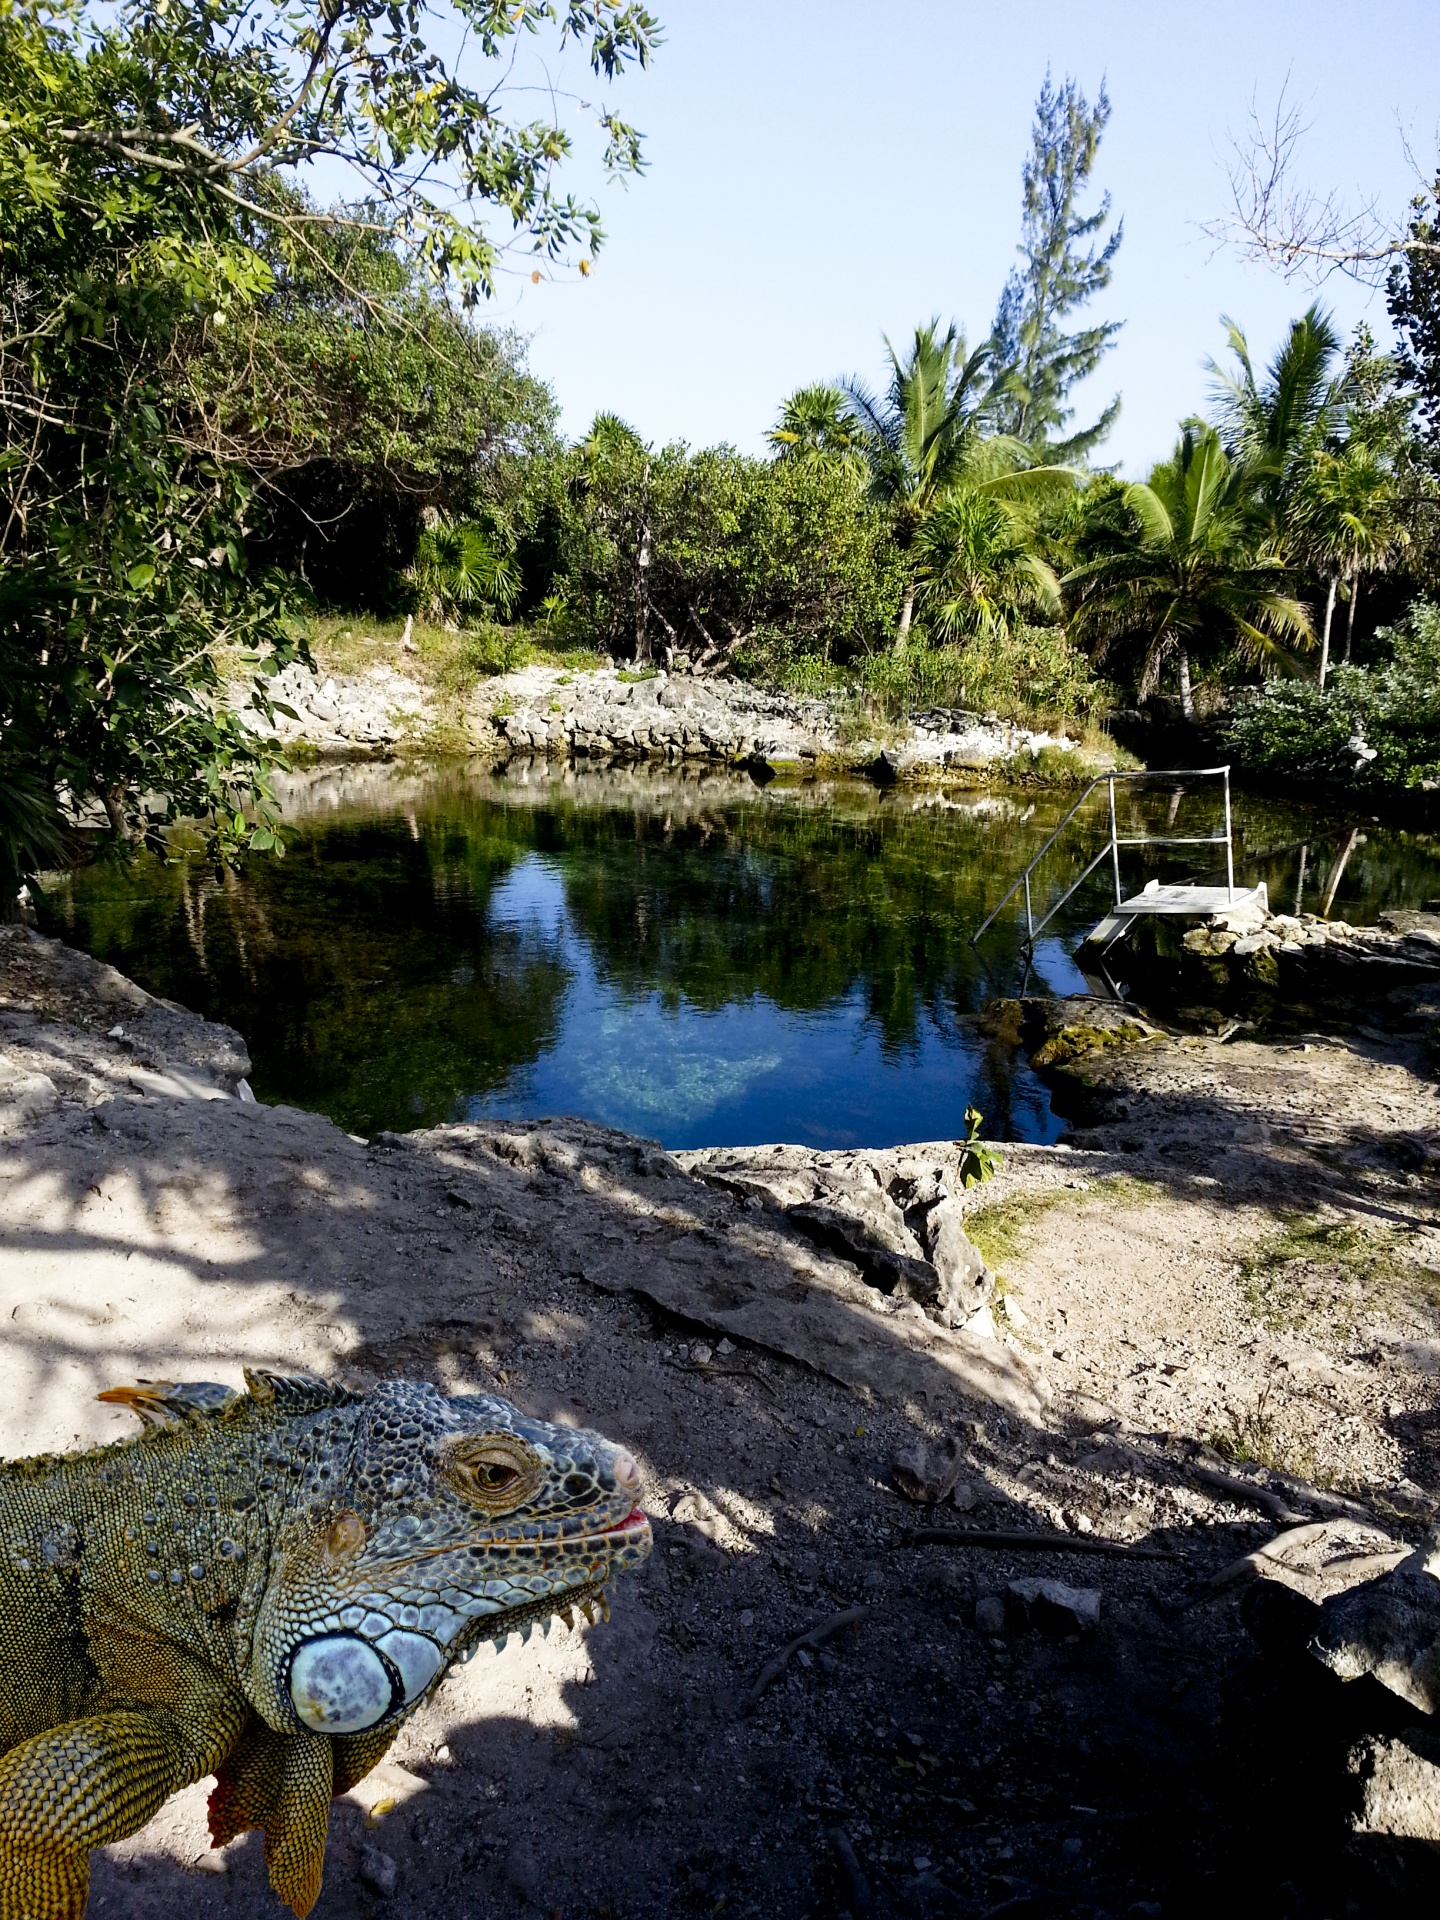 iguana colorful lizard free photo